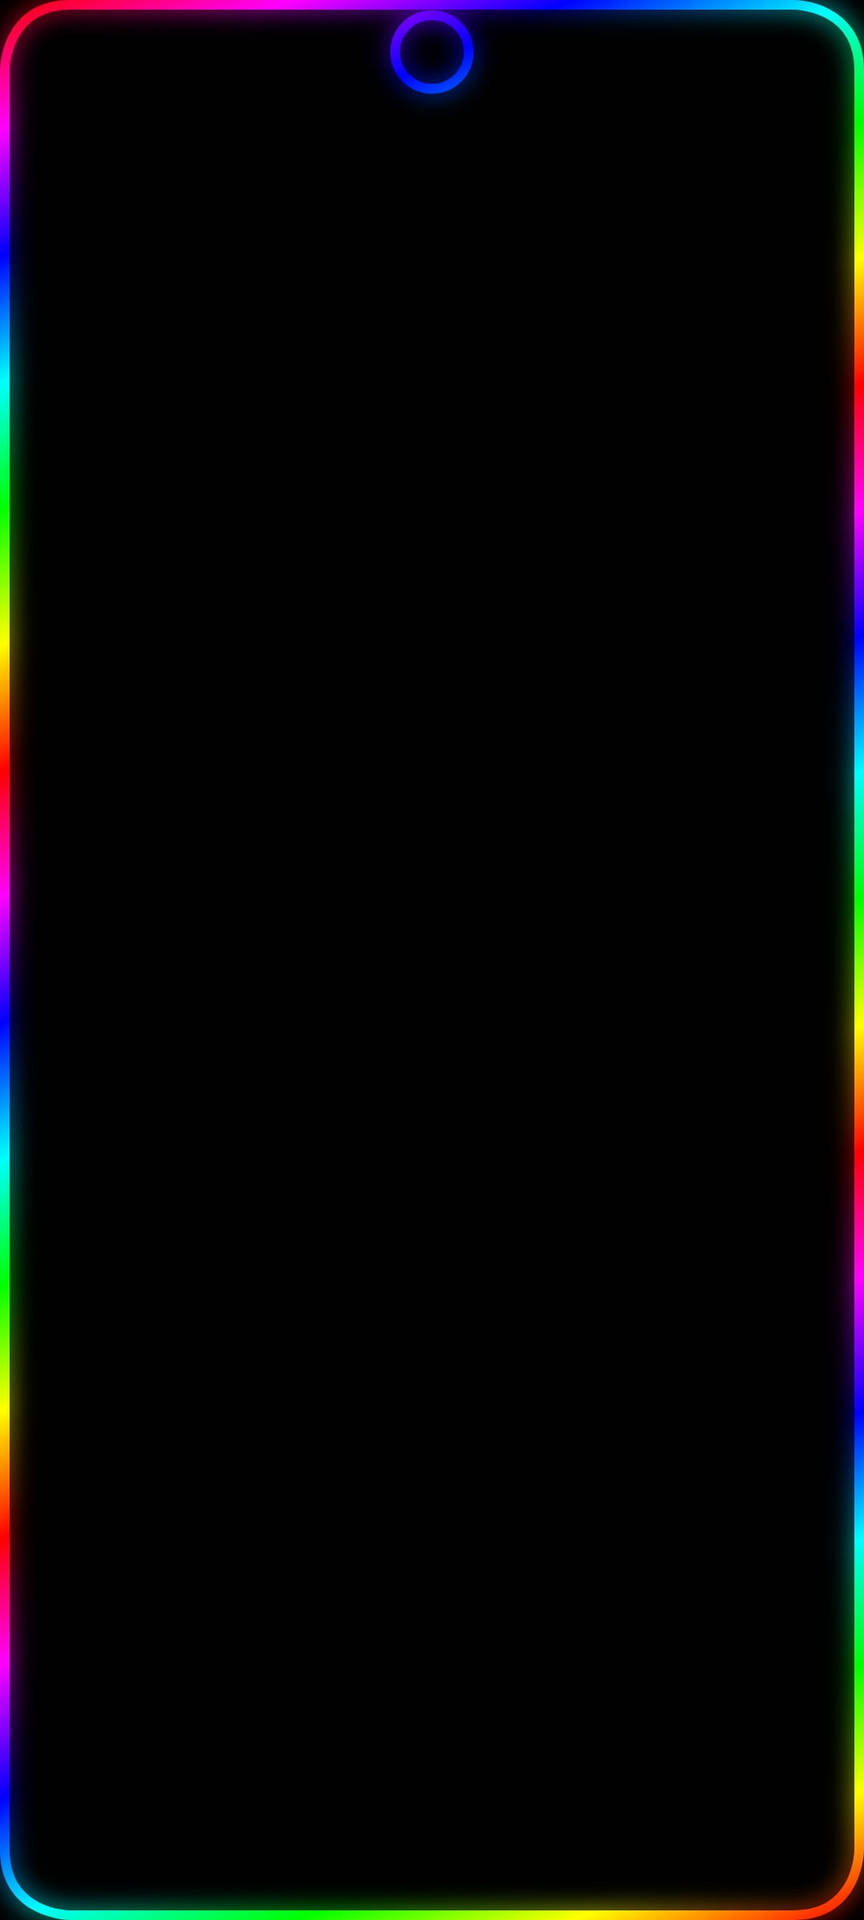 Neonregnbågeredmi Note 9-stanshål. Wallpaper